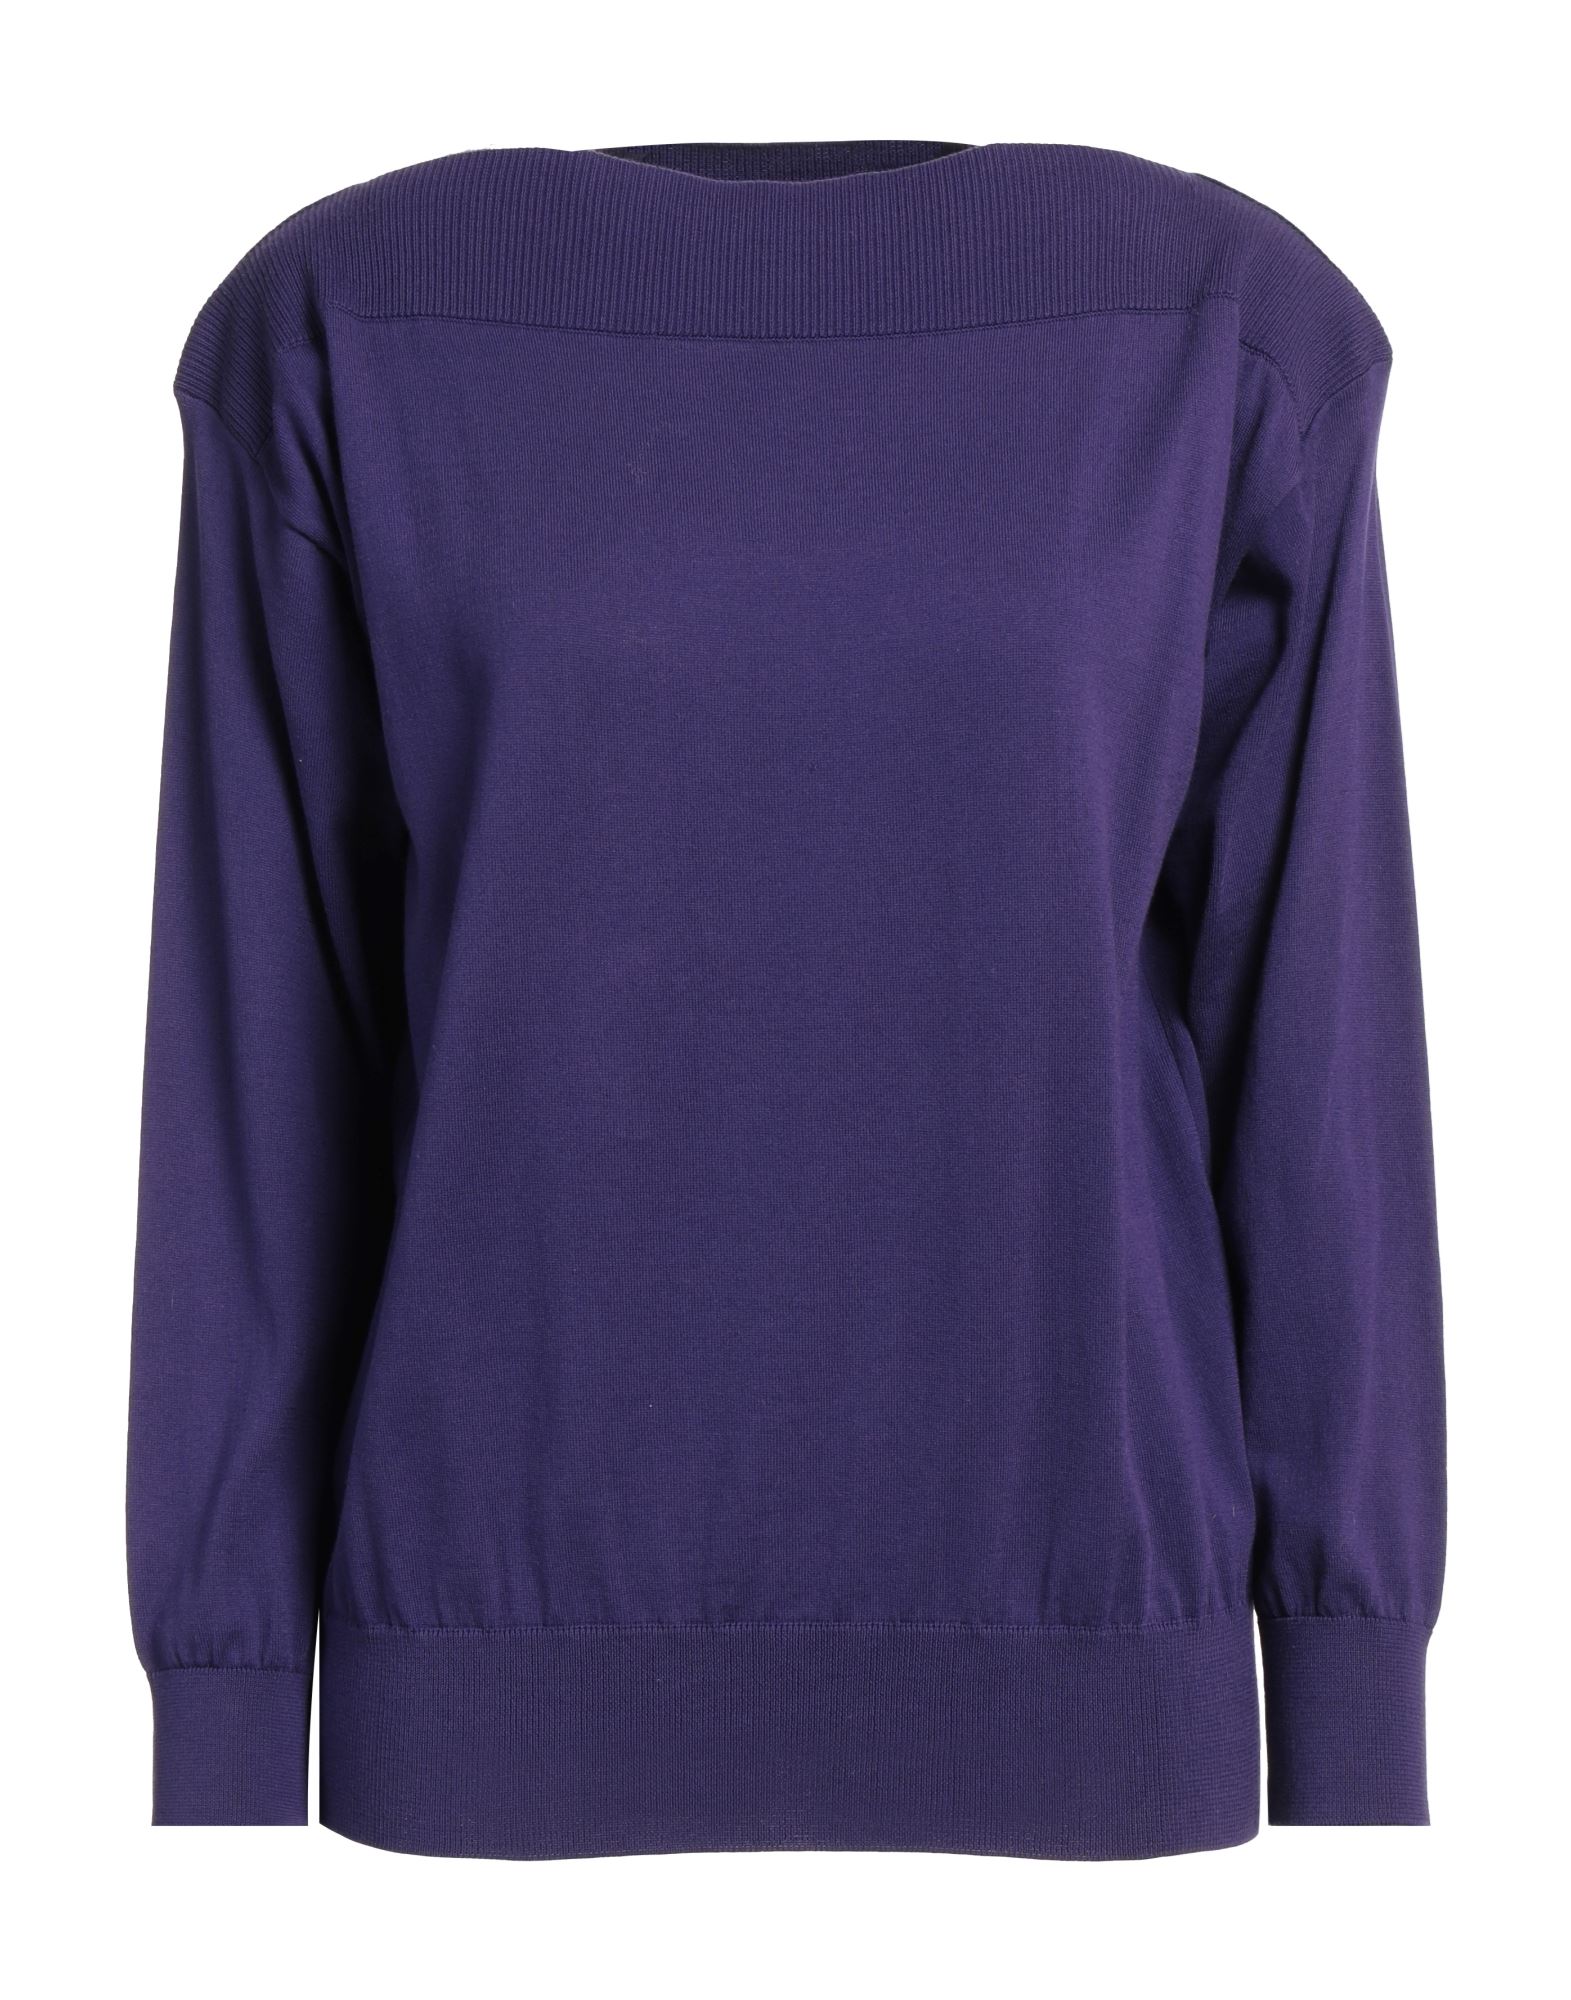 Alpha Studio Sweaters In Purple